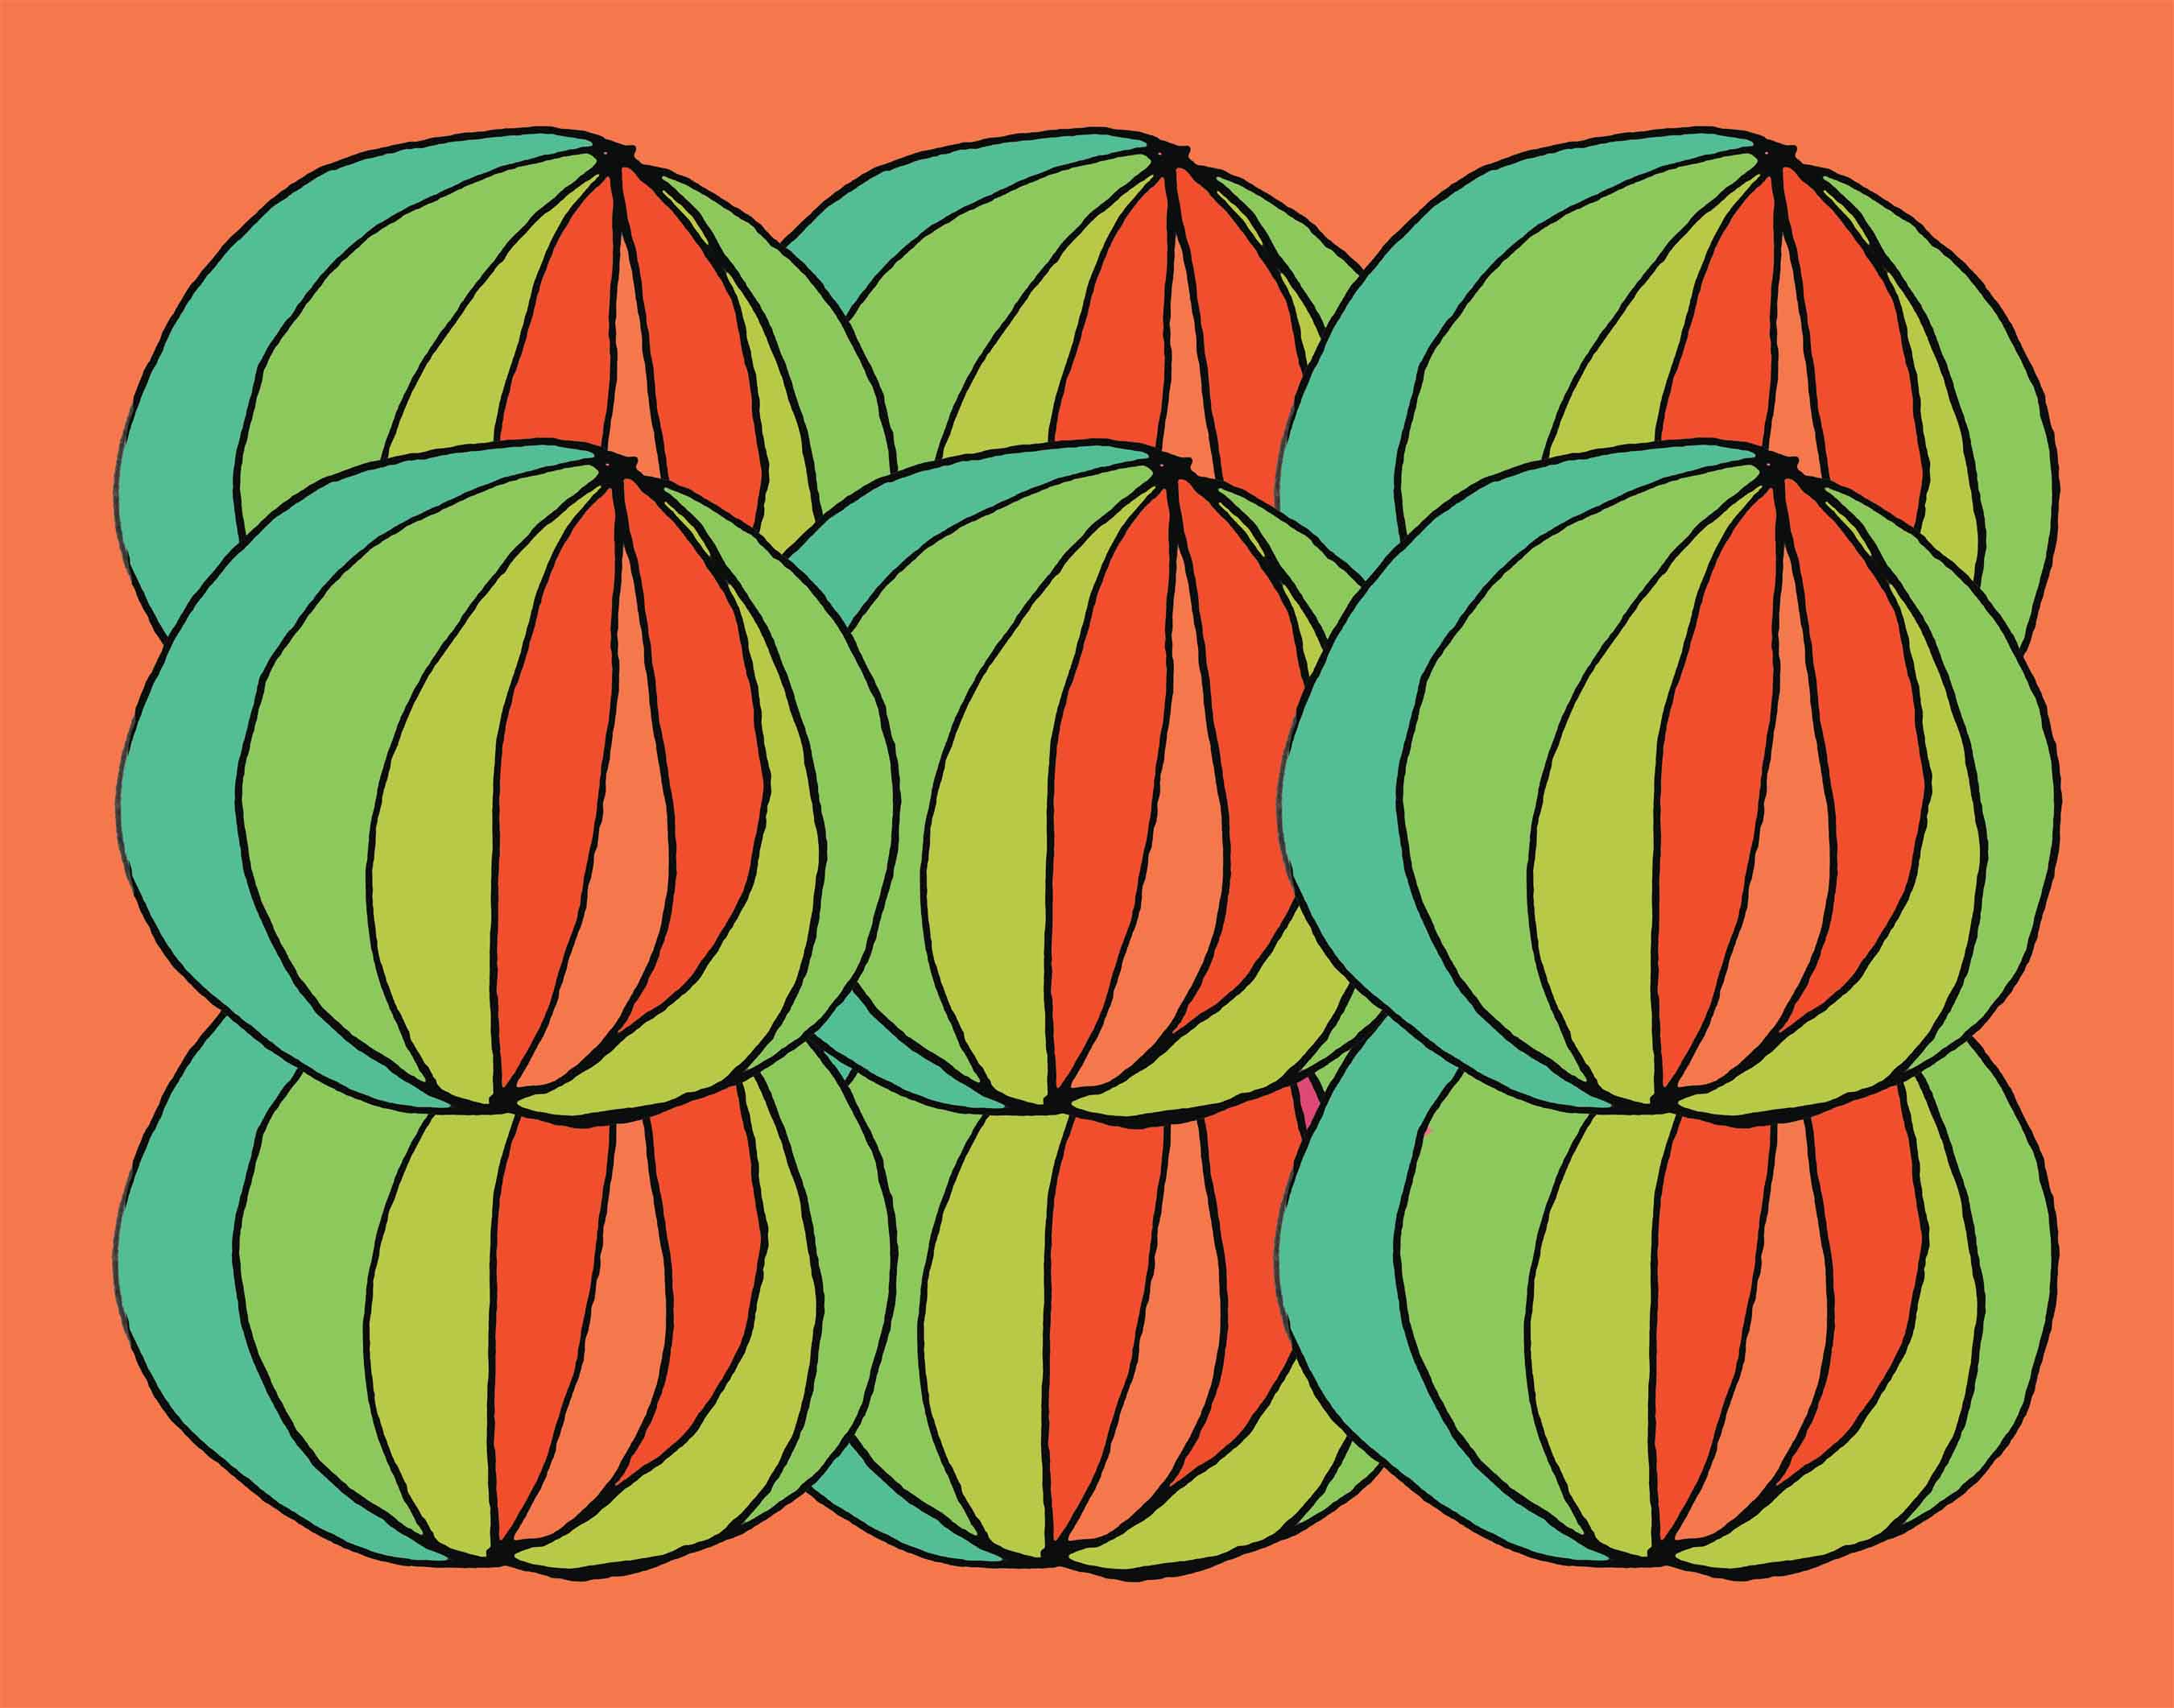 art every day number 337 / illustration / pattern / layered orange greens